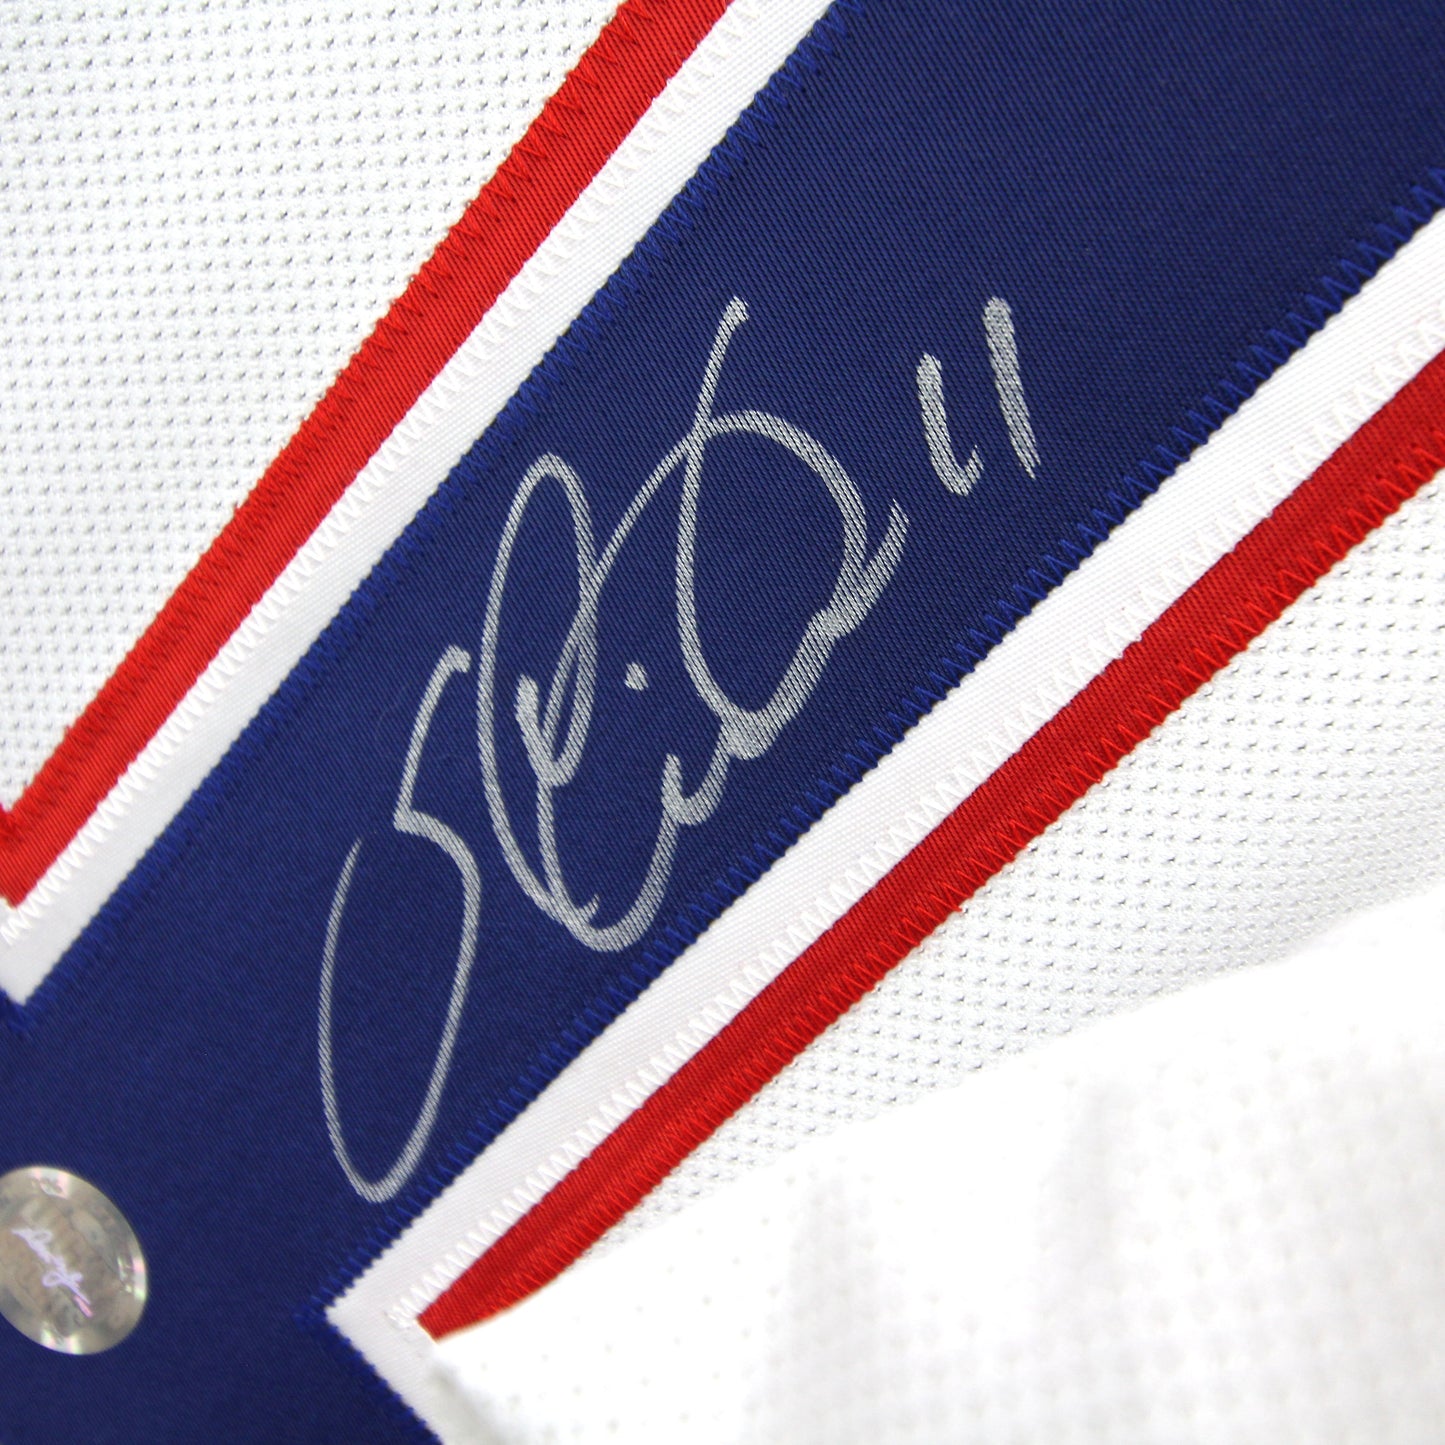 Saku Koivu - Canadiens - Autographed Jersey / Chandail autographié